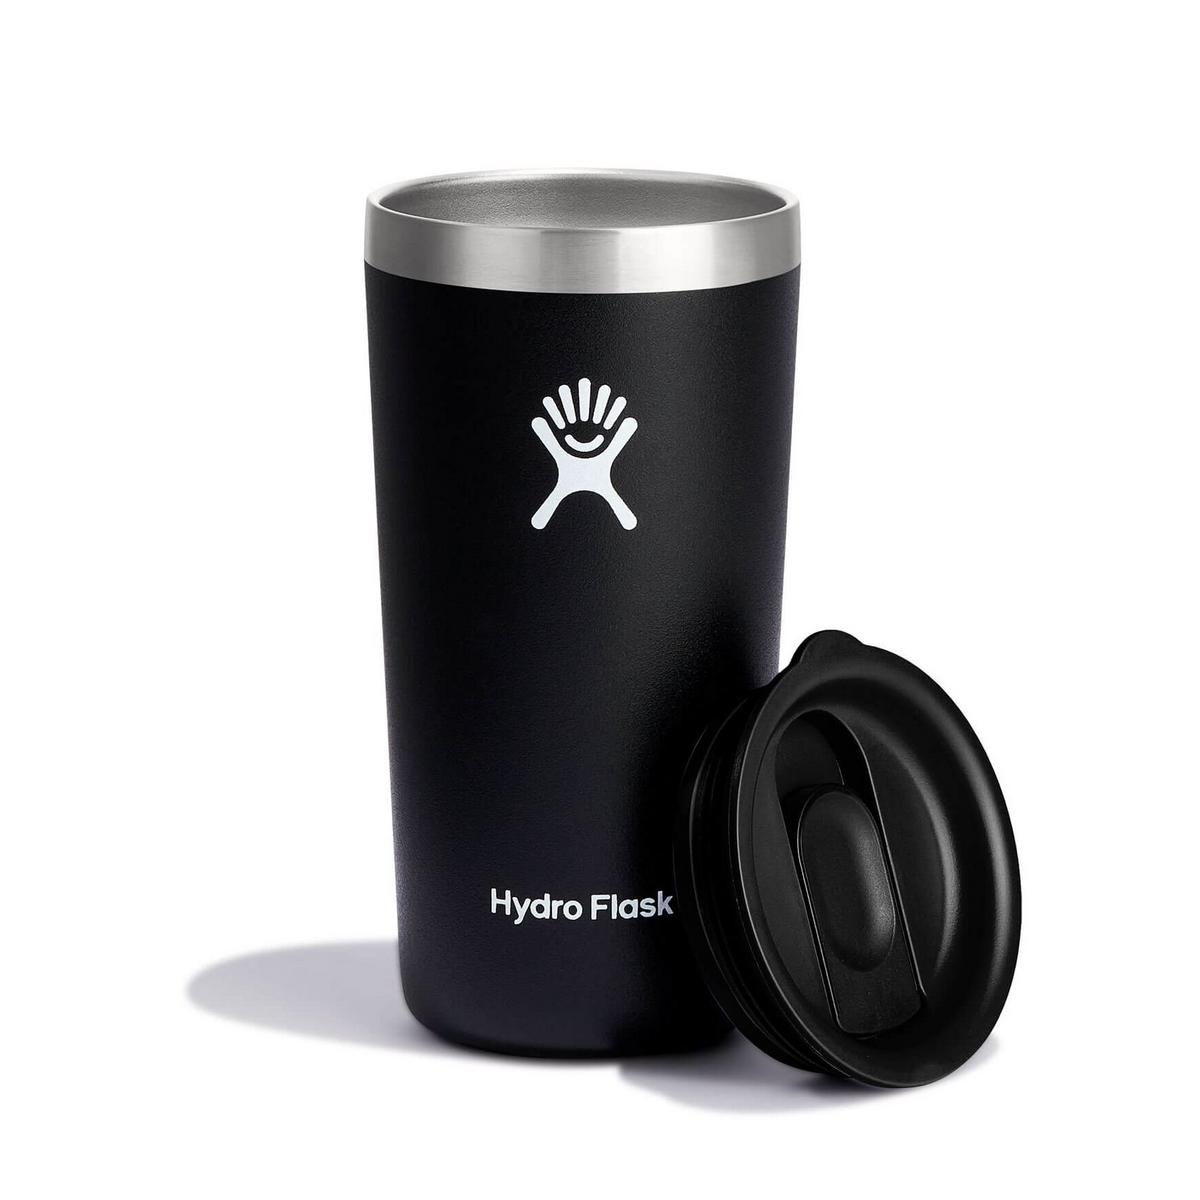 Hydro Flask 12 oz All-Round Tumbler - Black